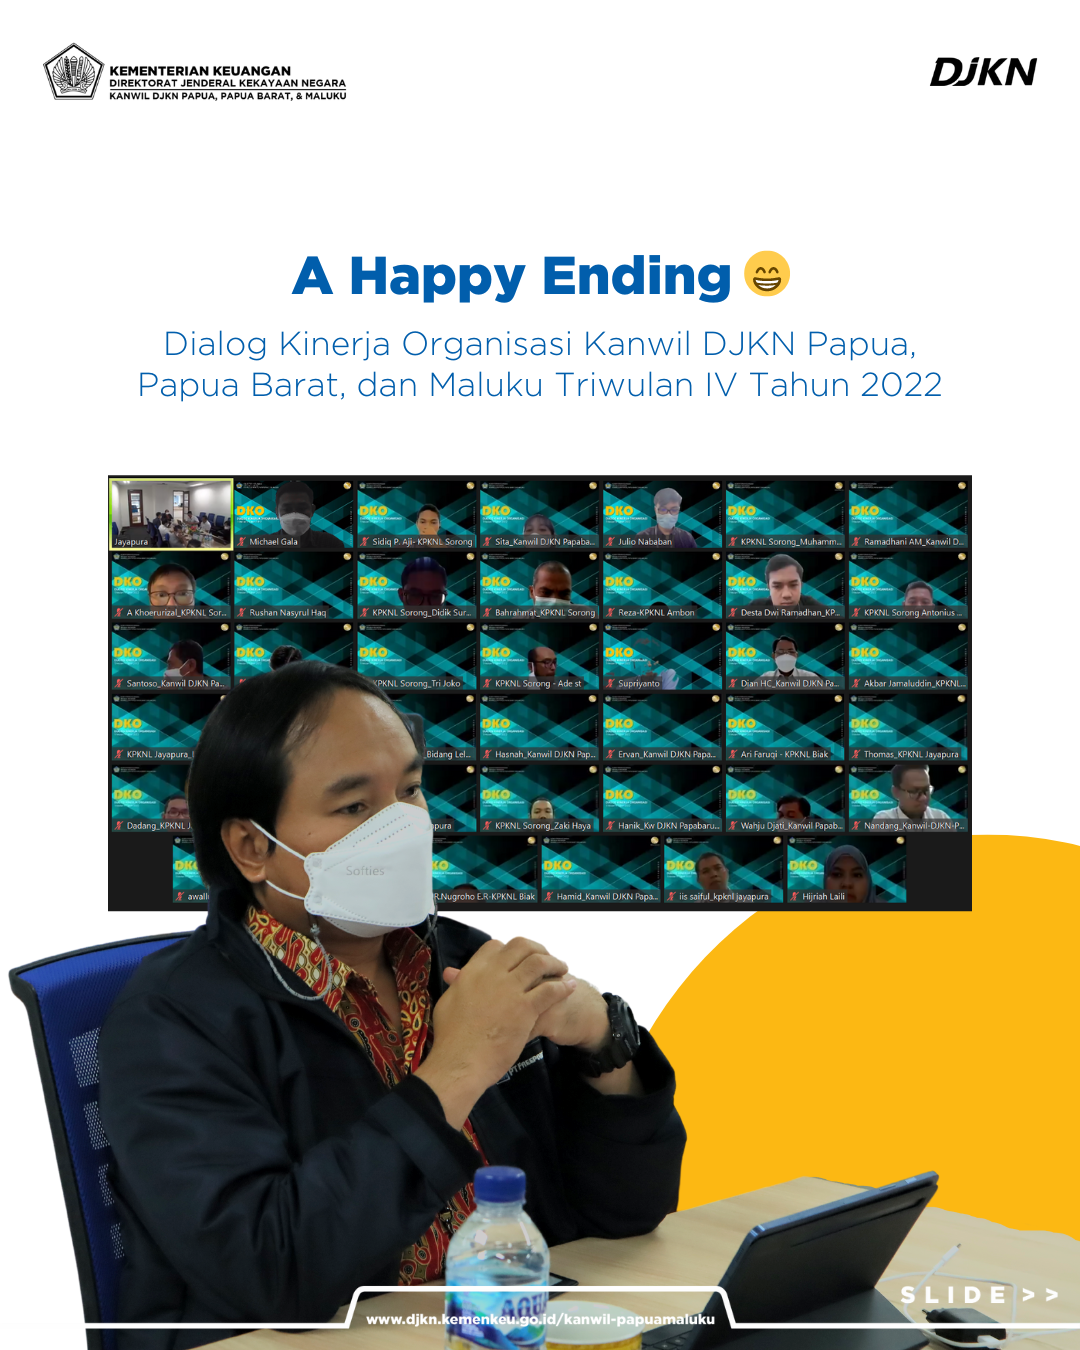 A Happy Ending: Dialog Kinerja Organisasi Triwulan IV Tahun 2022